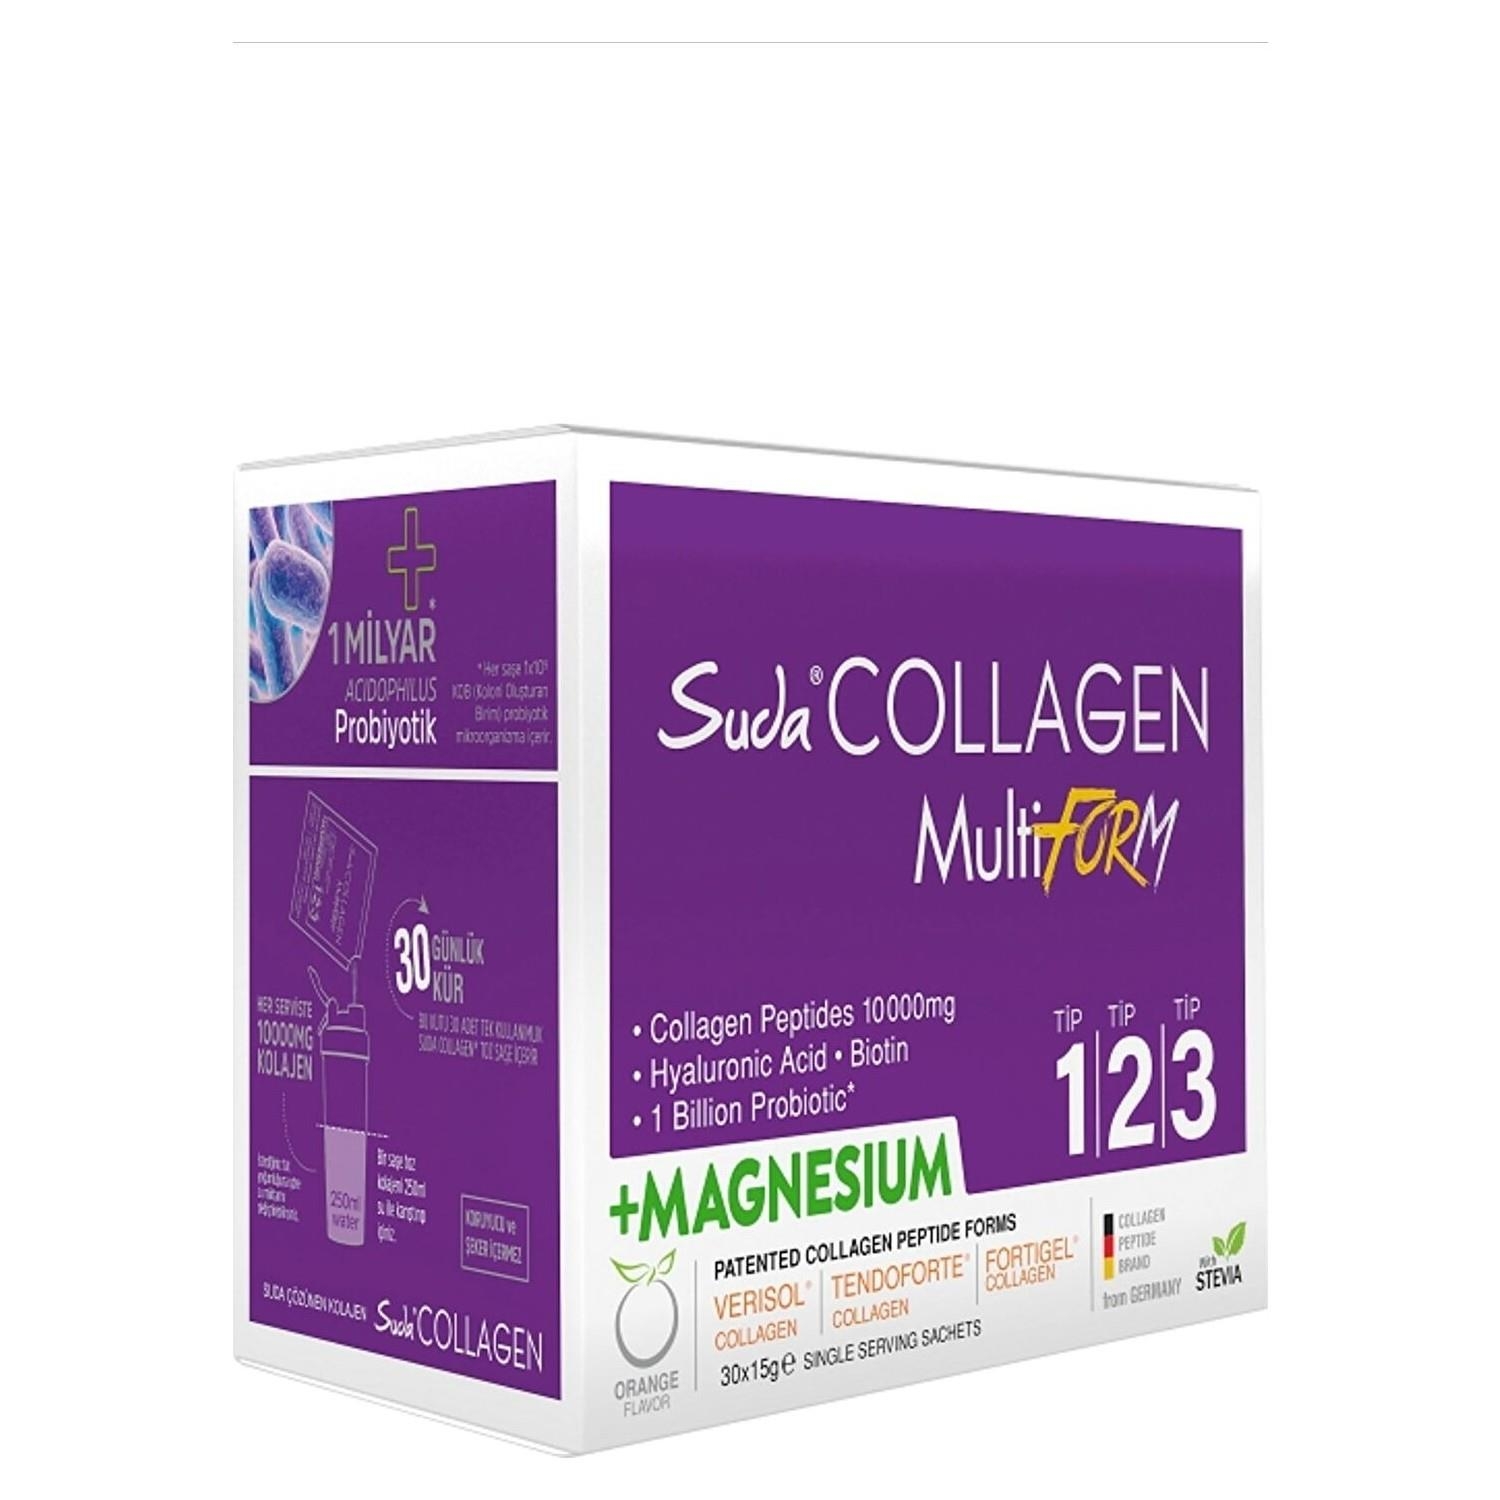 Suda Collagen Multi form. Suda Collagen Multiform 90 Tablets. Коллаген suda Multiform. Коллаген suda Турция Multiform. Suda collagen